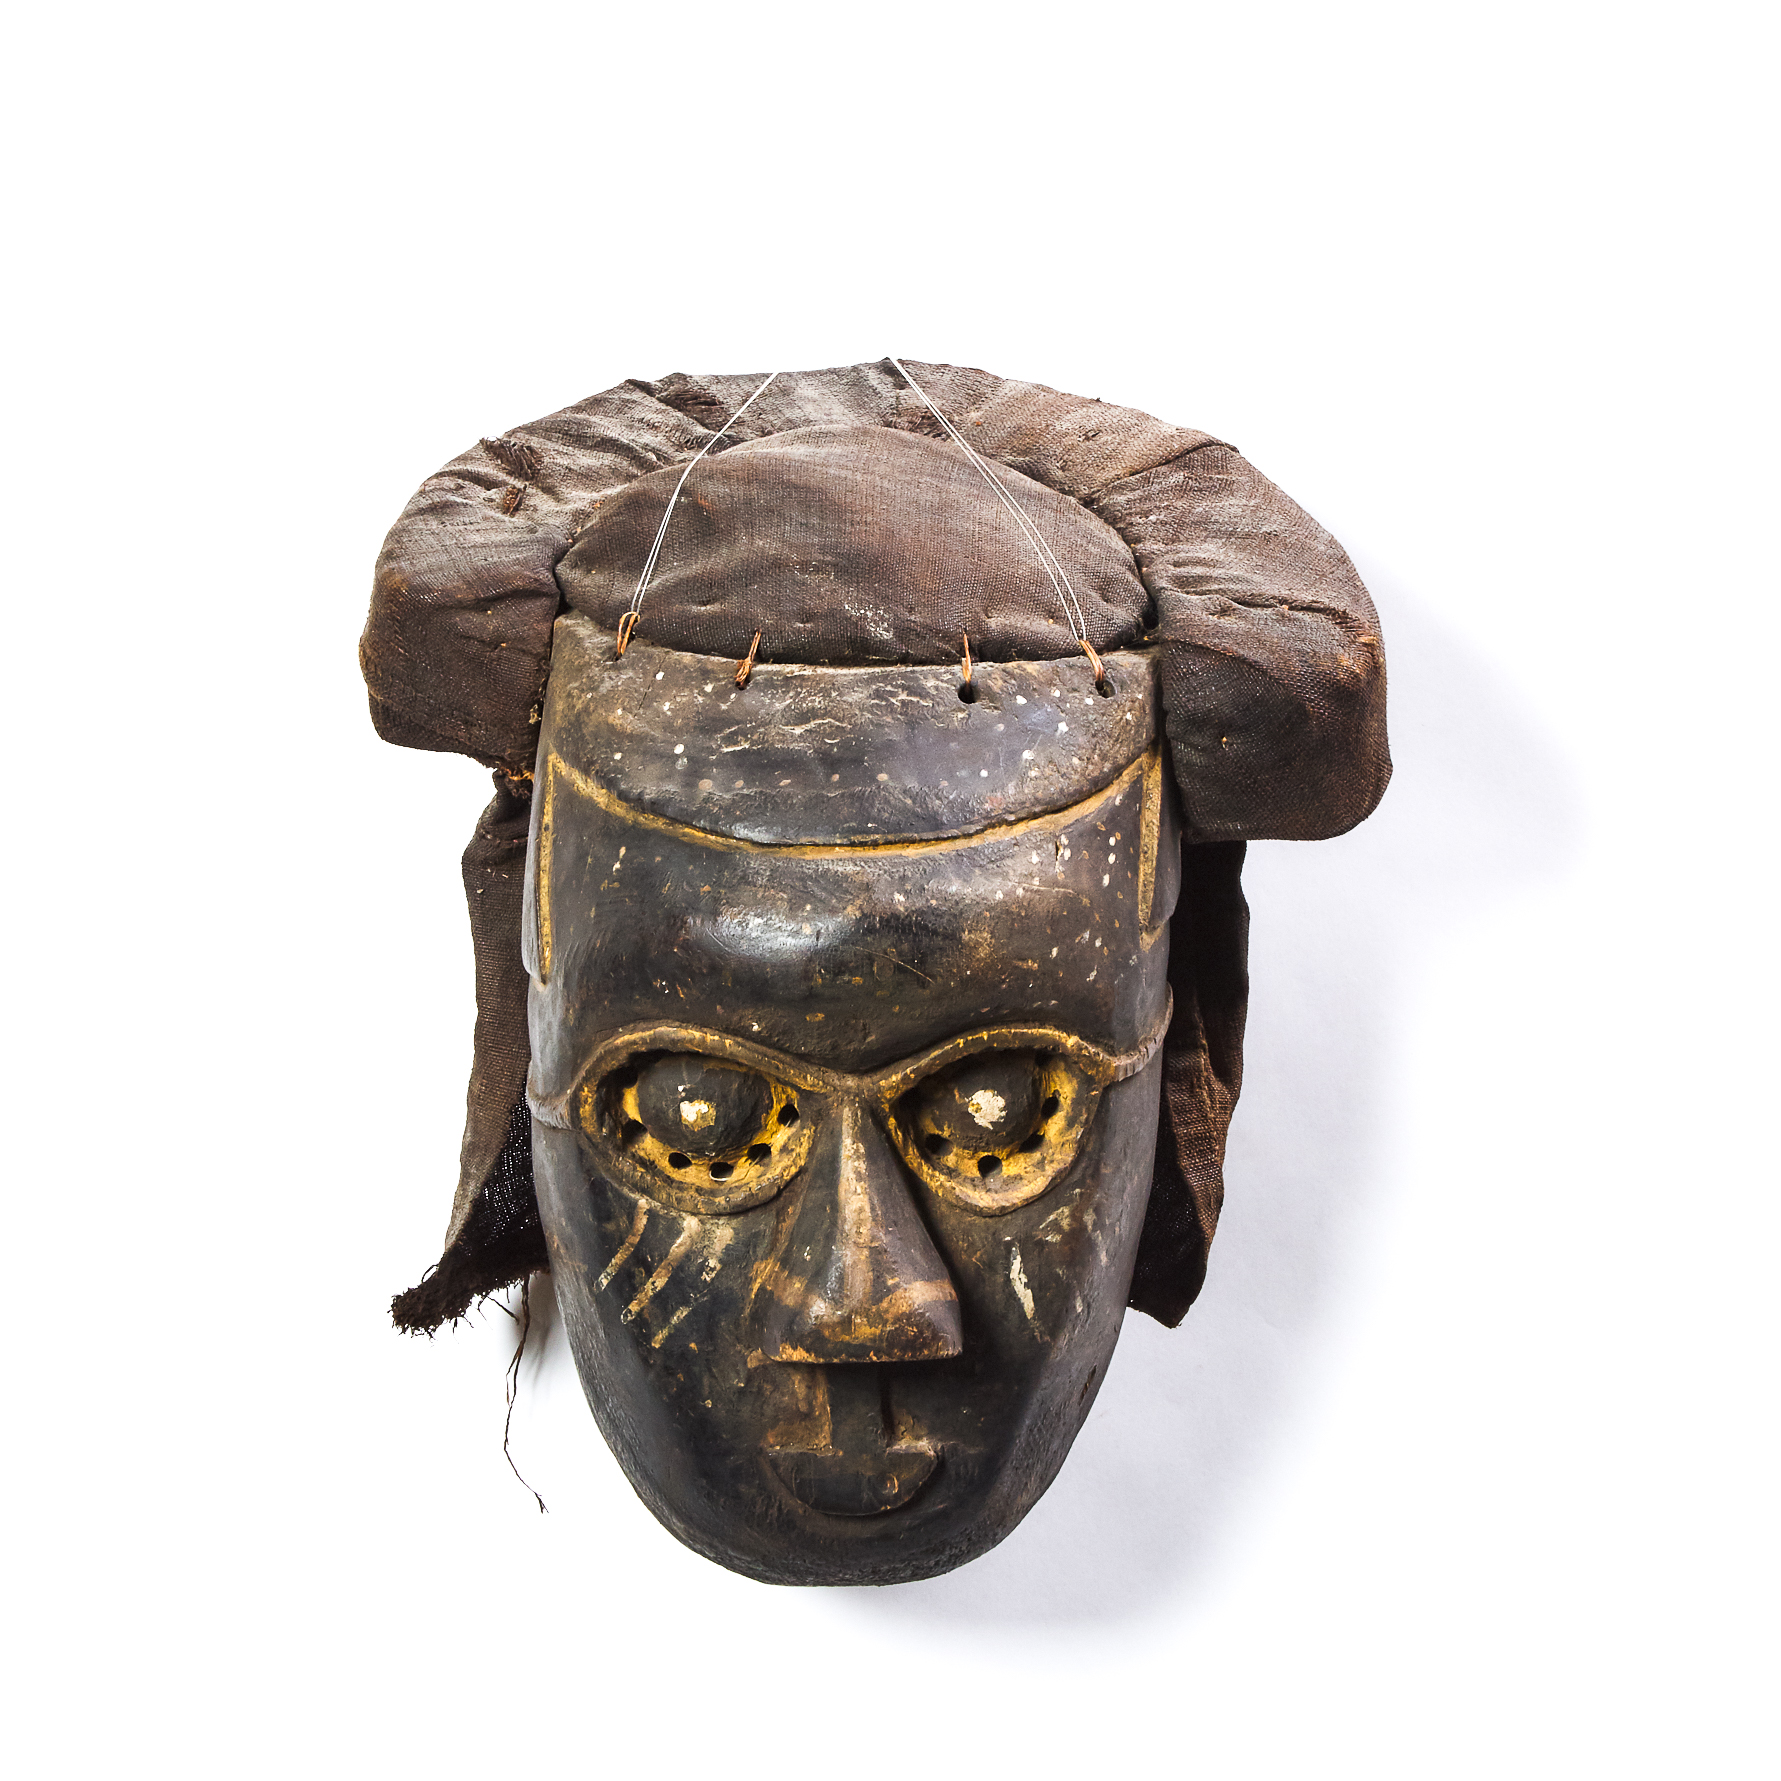 Kuba Pwoon Itok Mask, Democratic Republic of Congo, Central Africa, mid 20th century